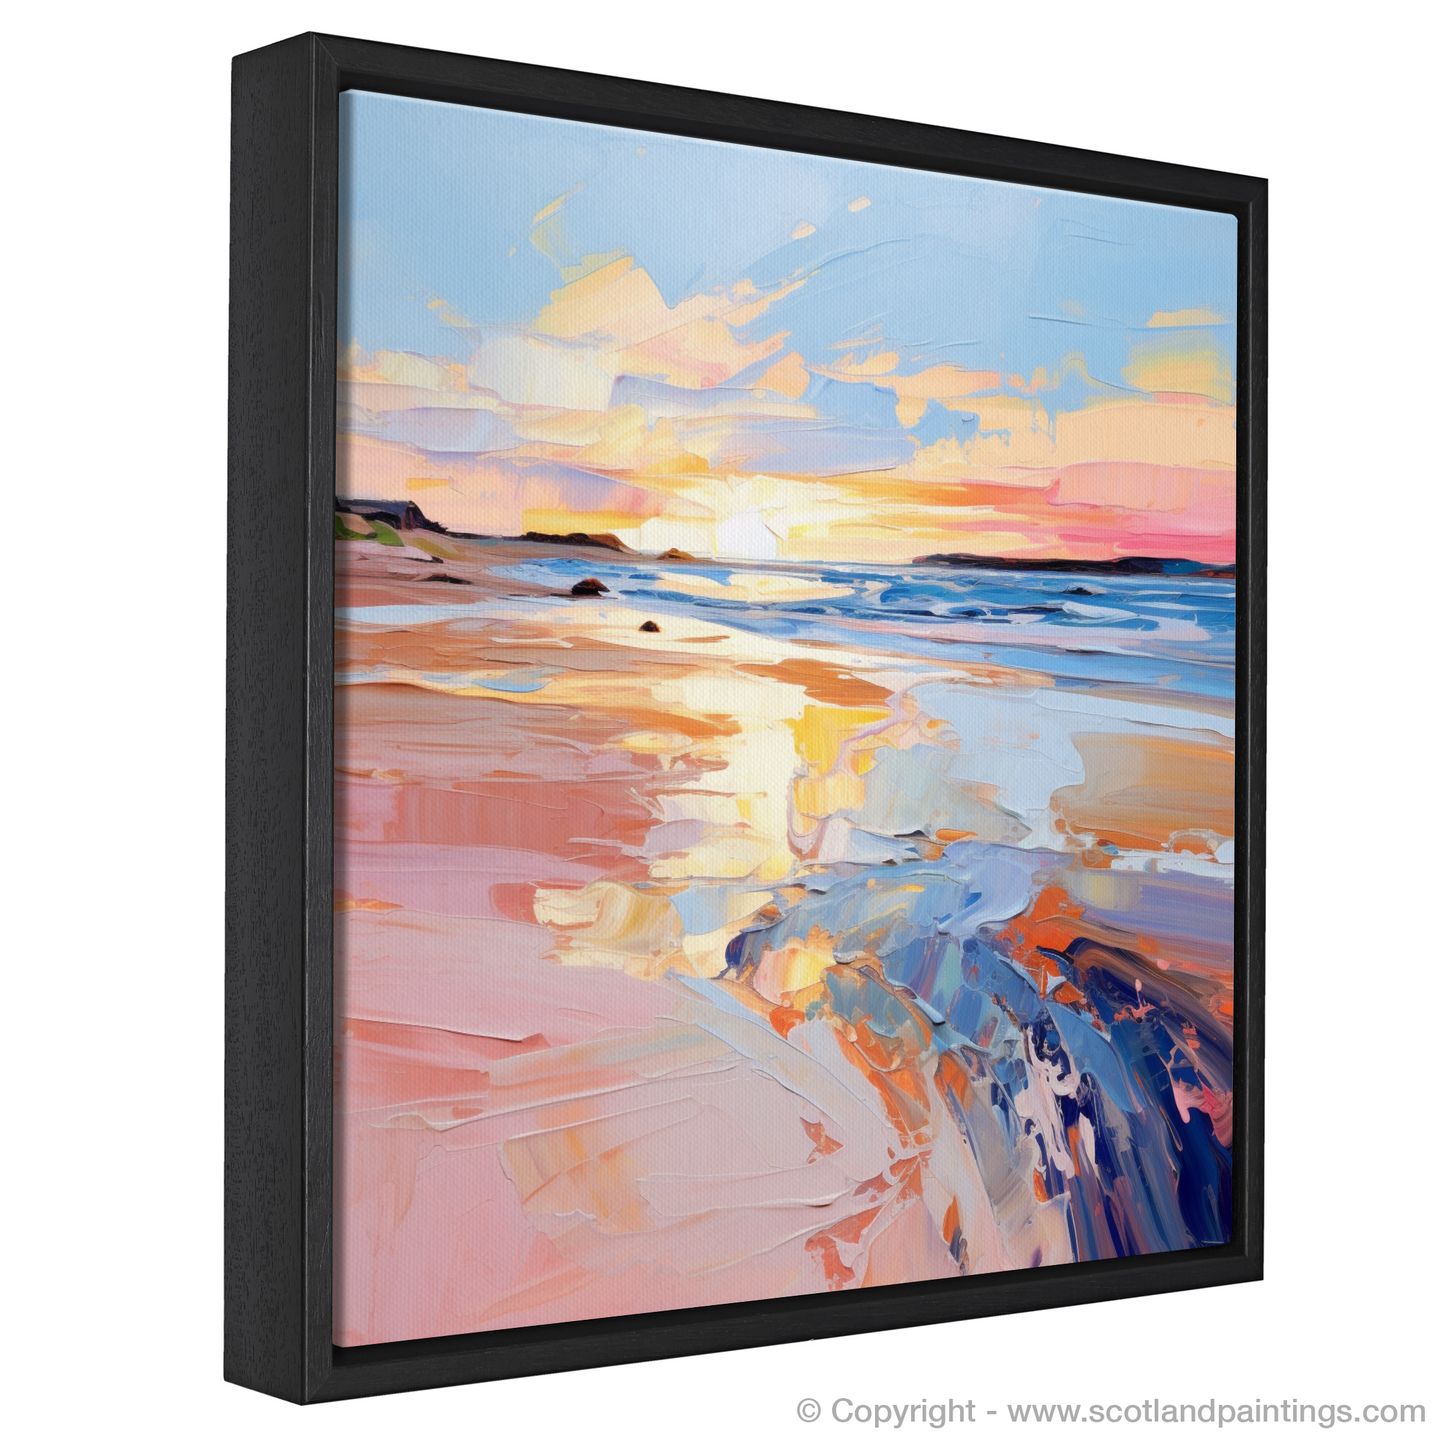 Painting and Art Print of Gullane Beach at sunset entitled "Gullane Beach Twilight Embrace".